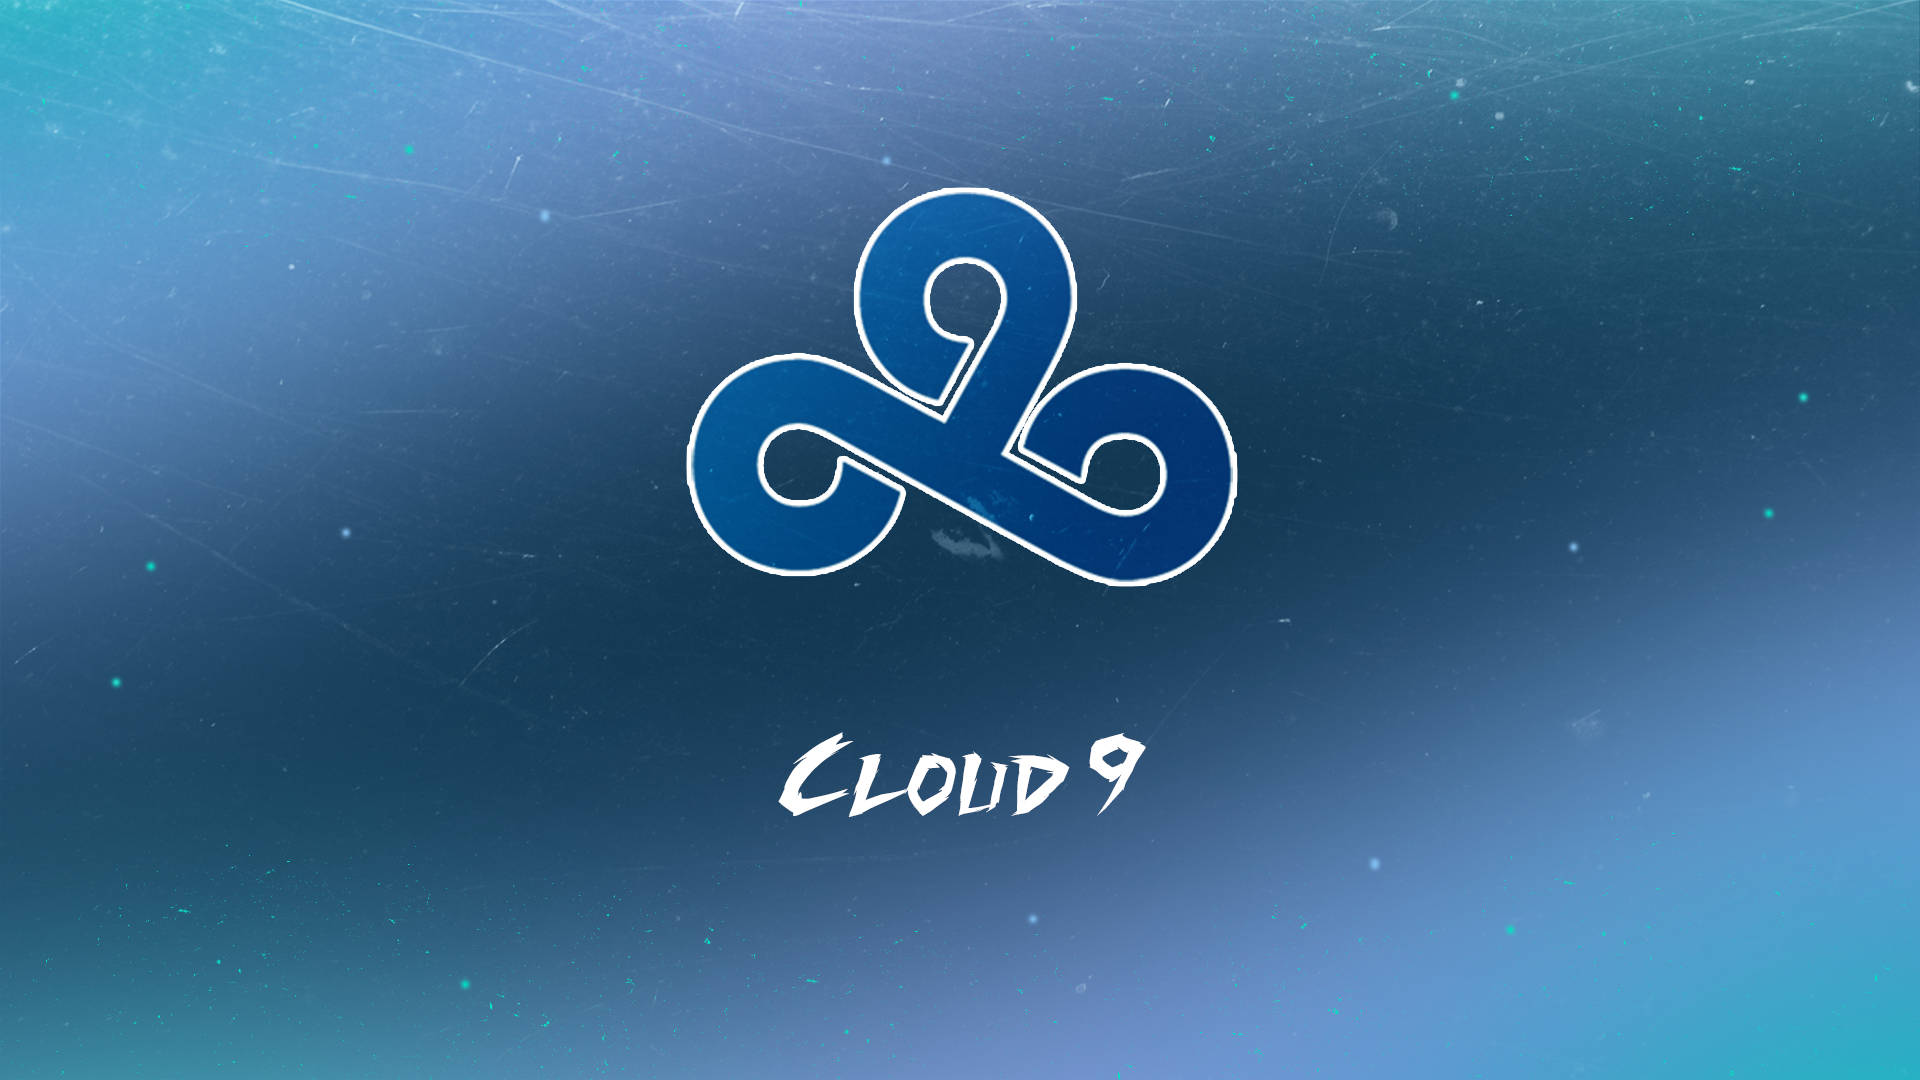 Cloud9 Multicolored Galaxy Logo Background